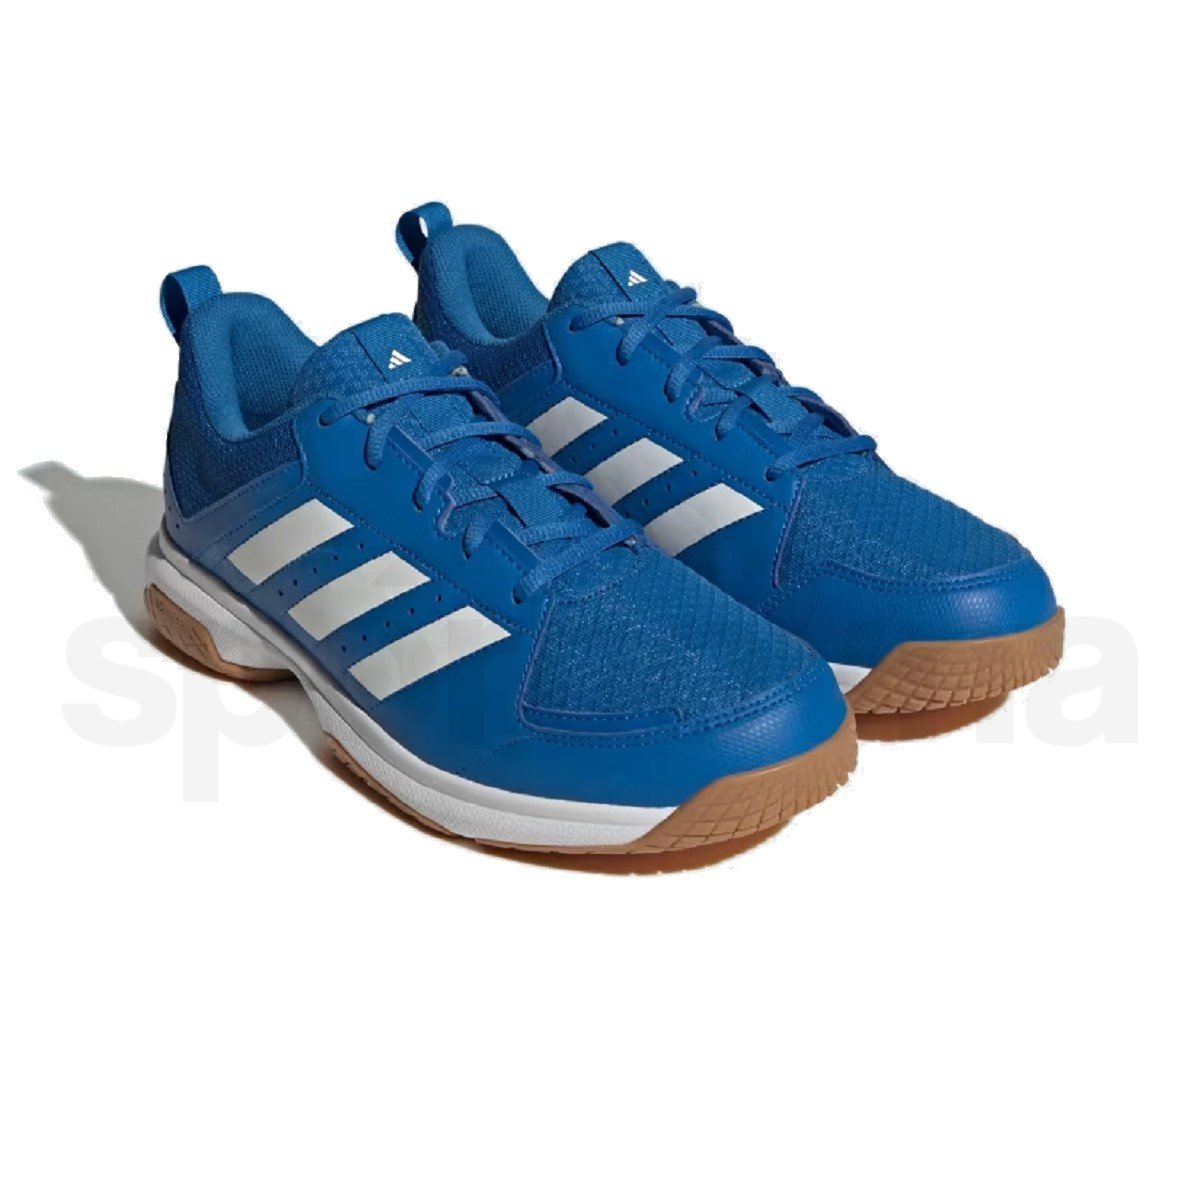 Obuv Adidas Ligra 7 M - modrá